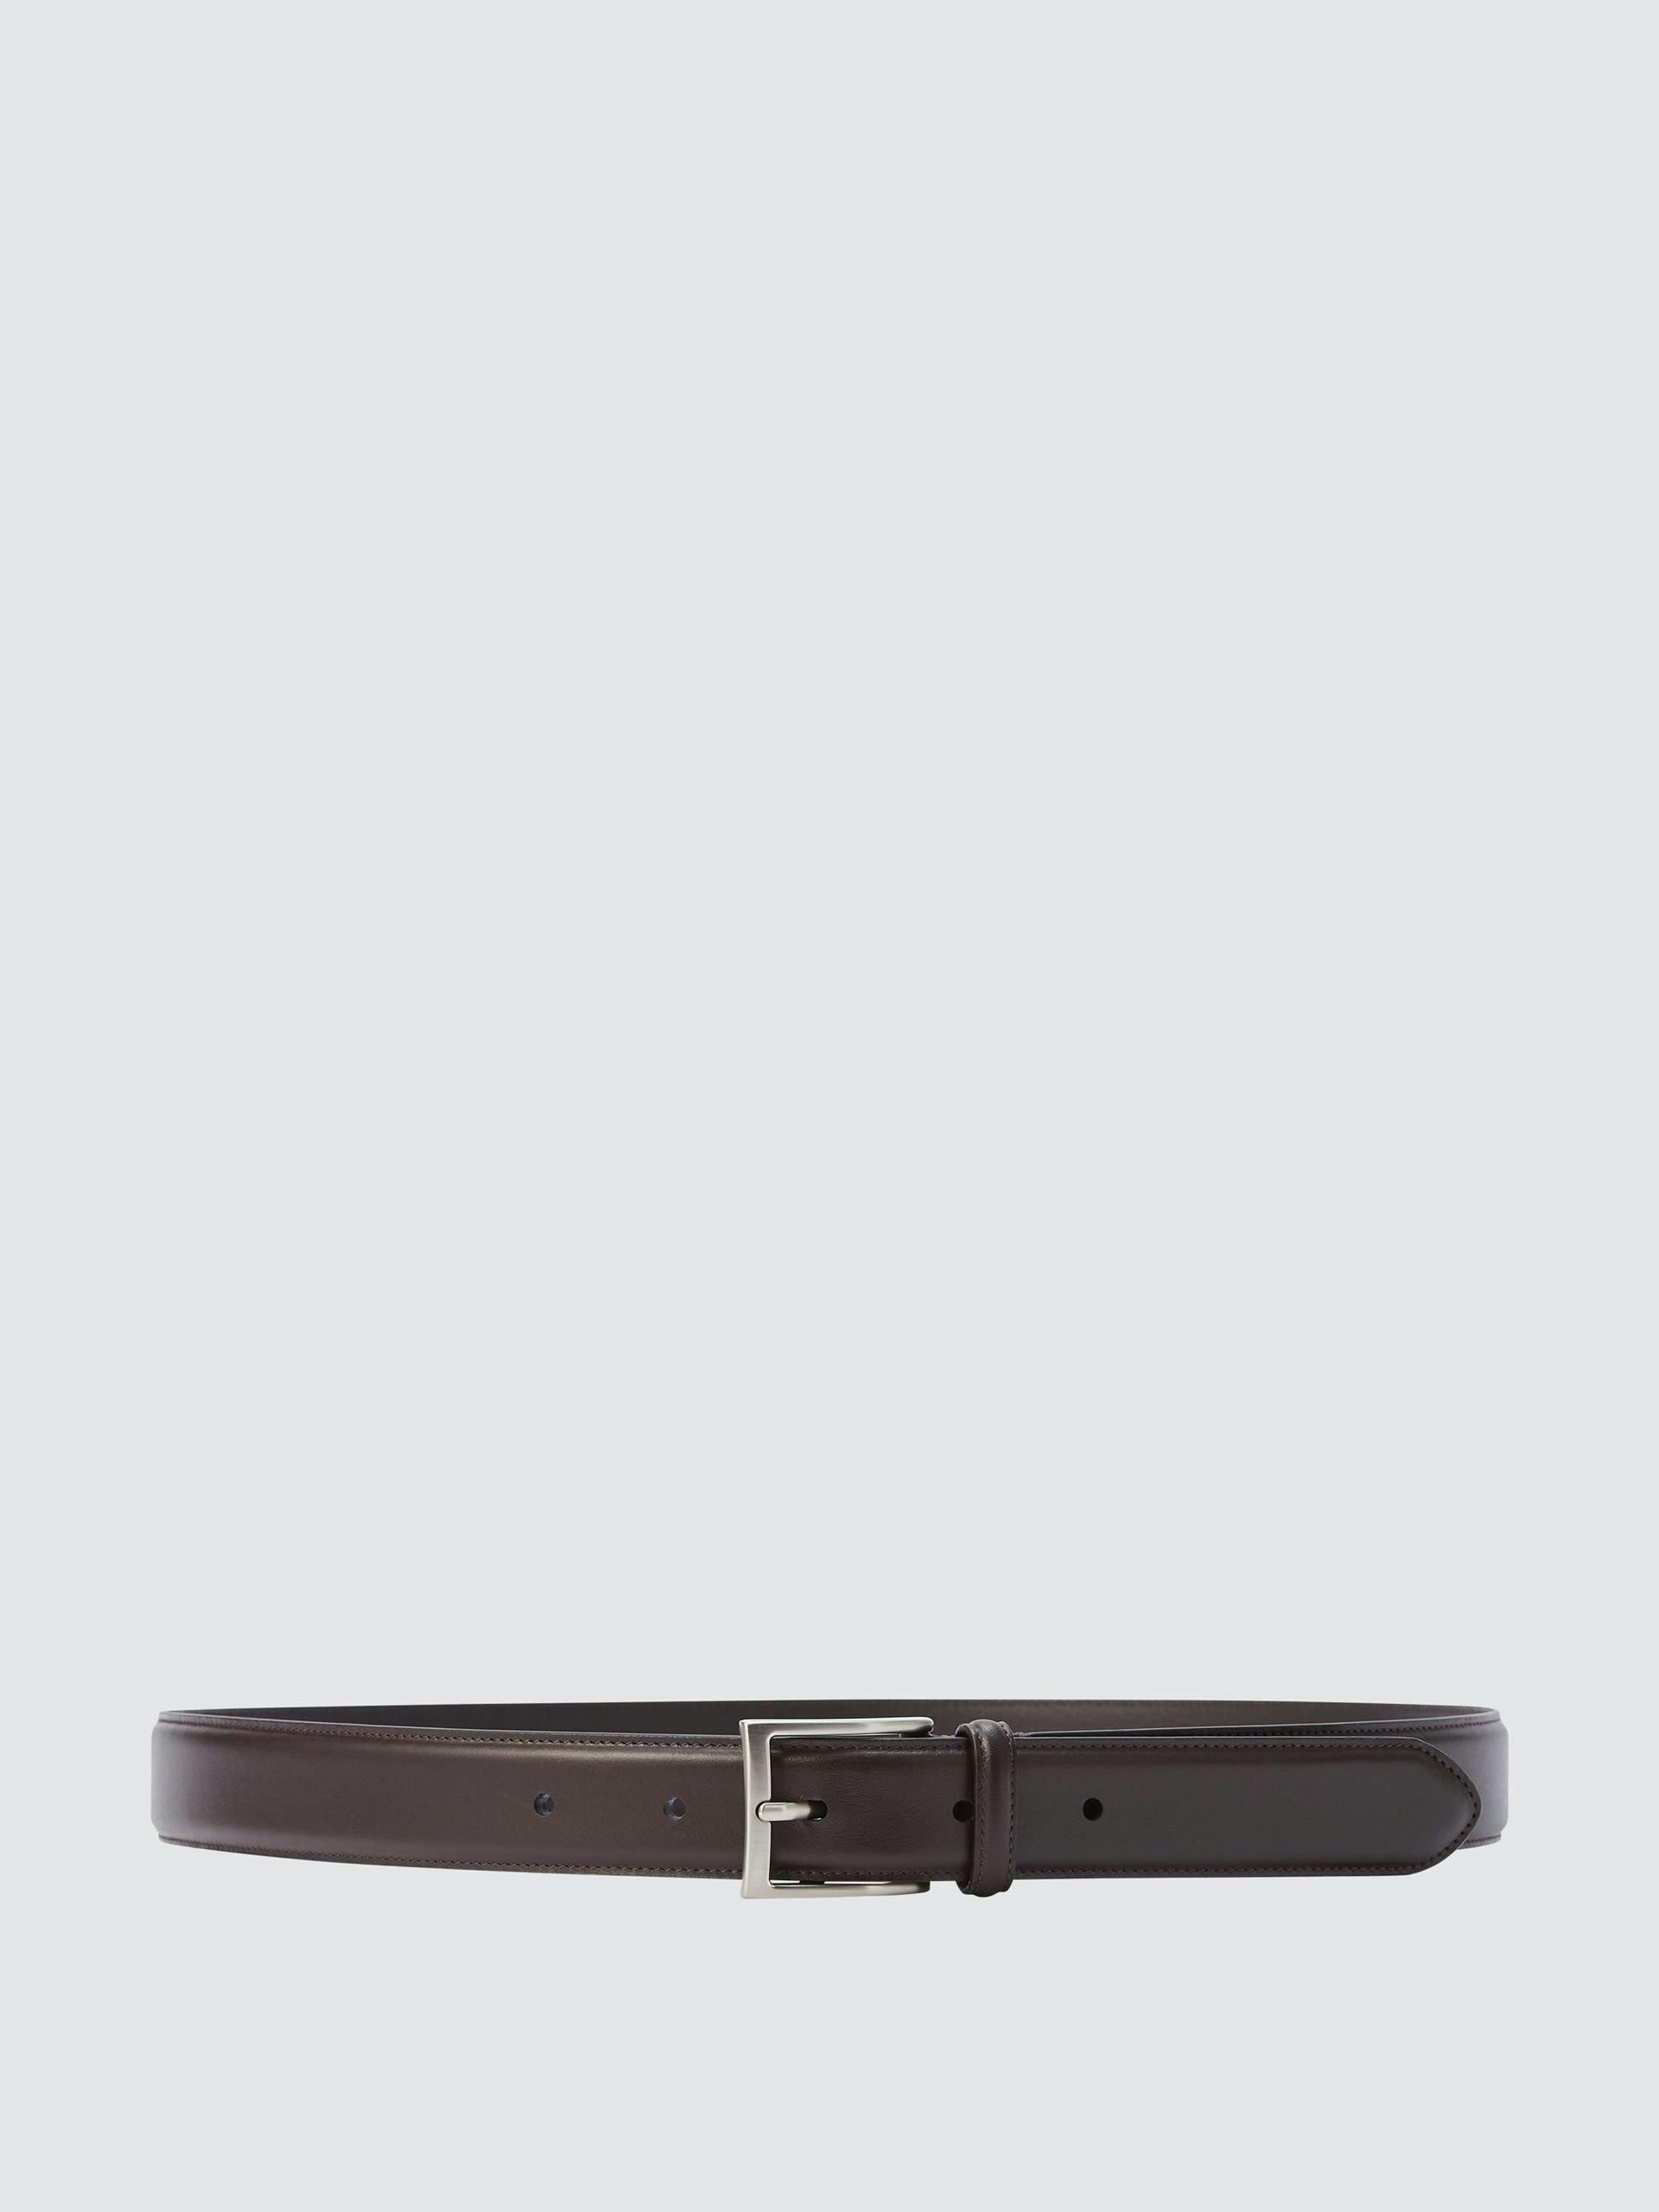 Italian leather belt in dark brown